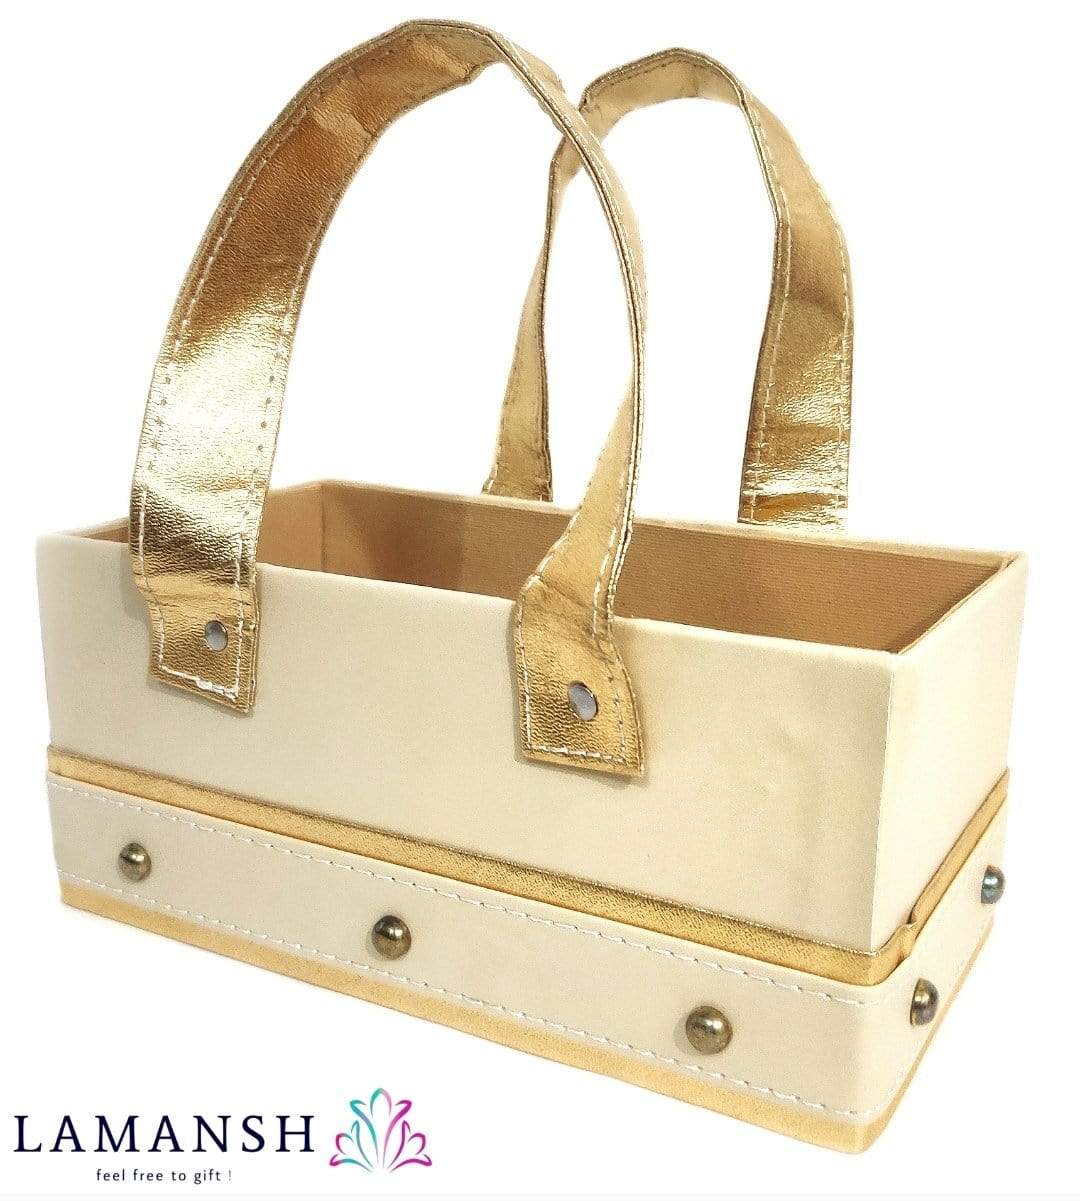 New Jaipur Handicraft Gift Baskets 💛 Lamansh® Luxurious Room Gift 🎁Hamper Basket Pack of 5